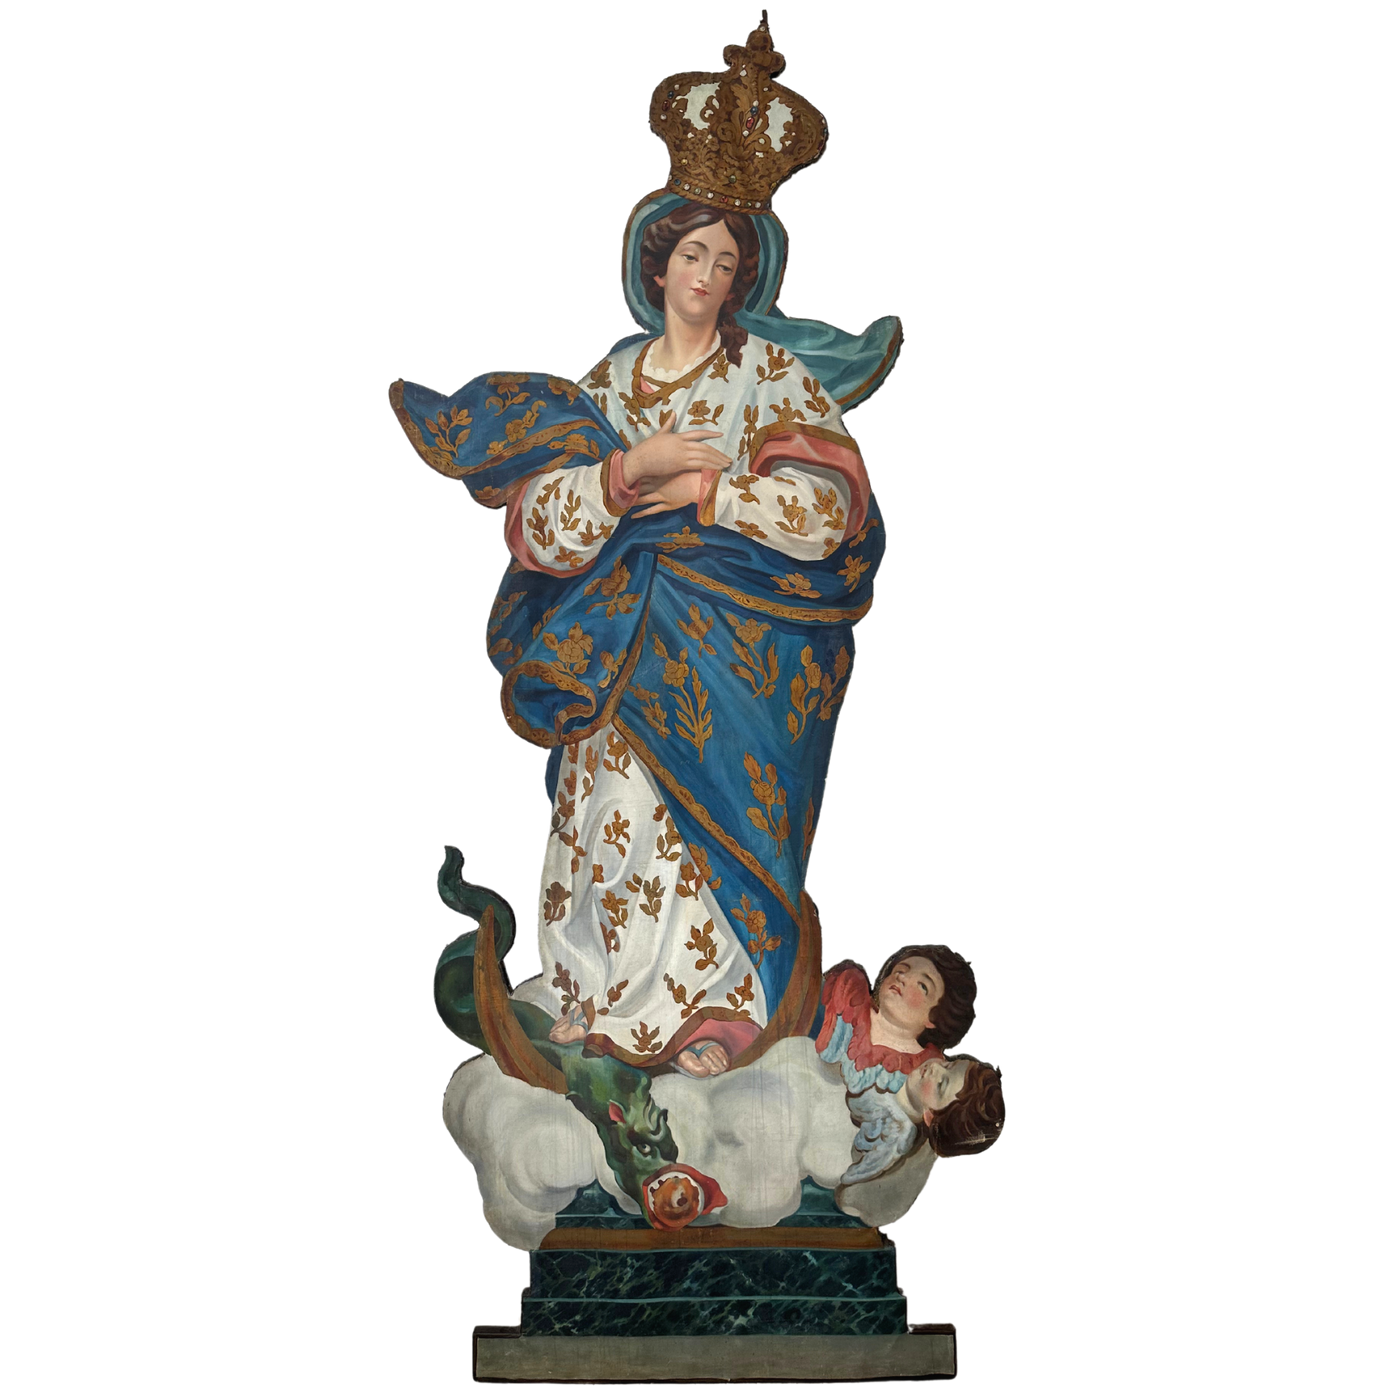 Italian Virgin Mary Painting c. 1860